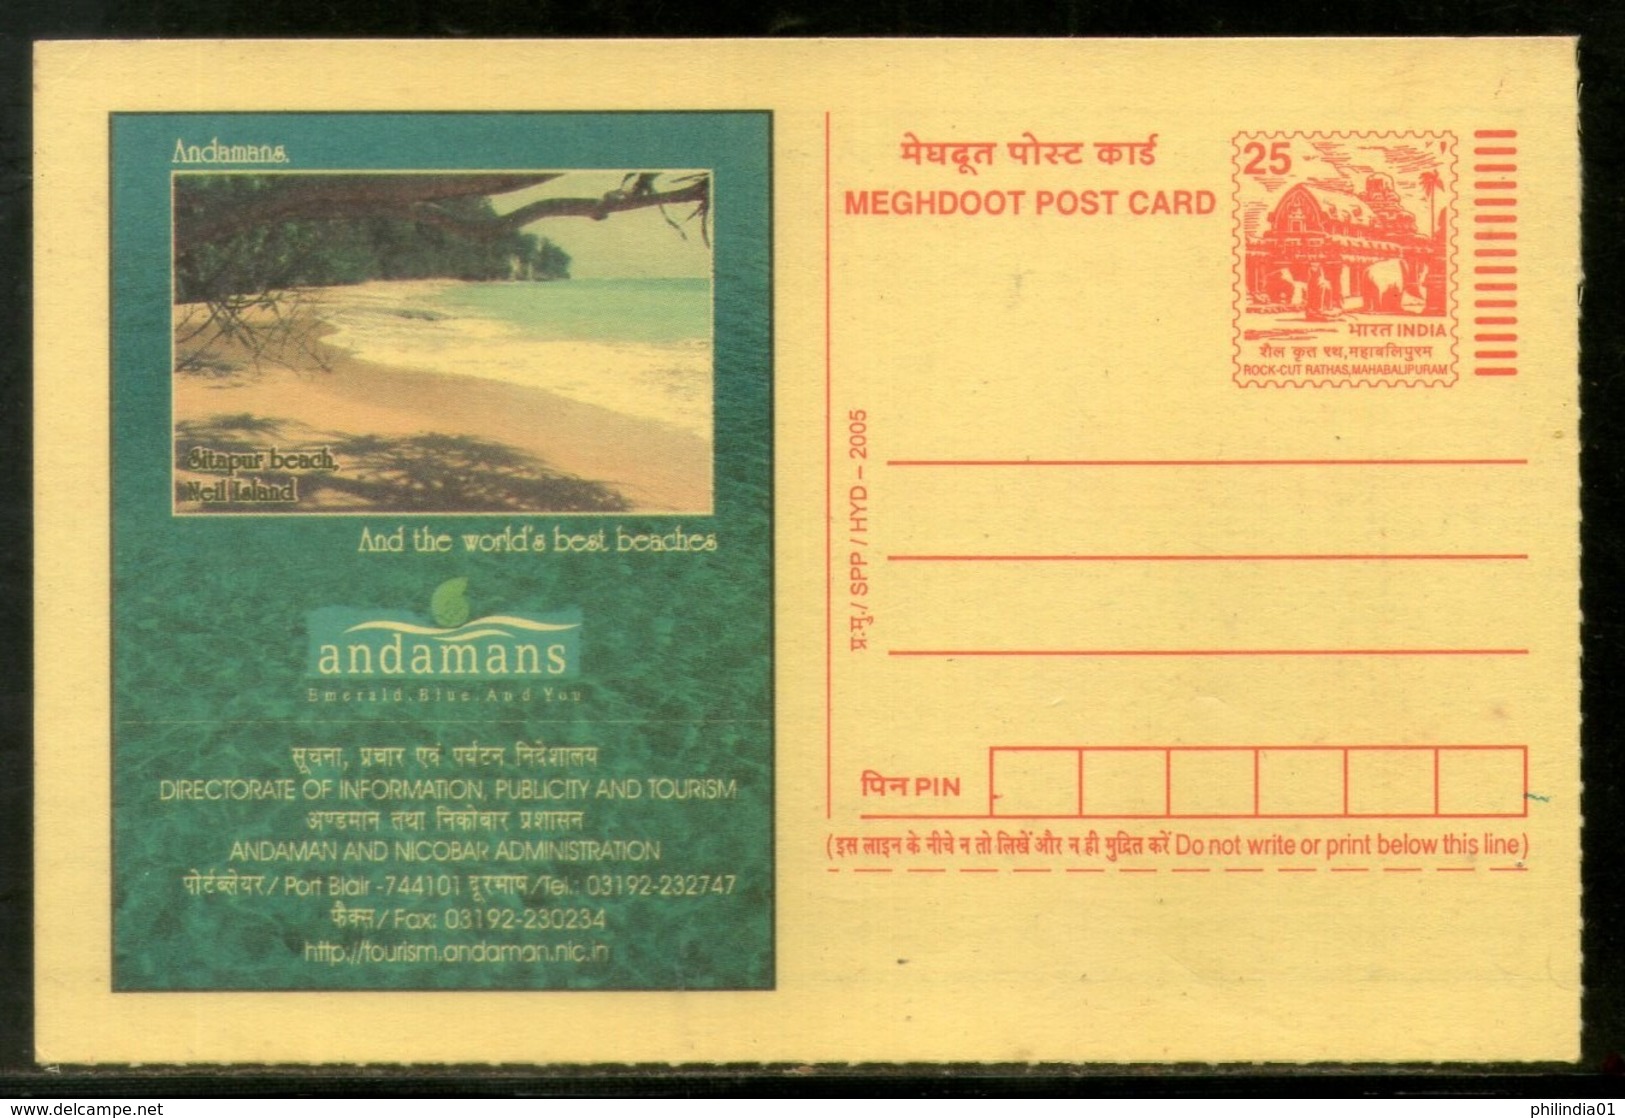 India 2005 Sitapur Beach Neil Islands Andamans Tourism  Meghdoot Post Card # 210 - Postcards